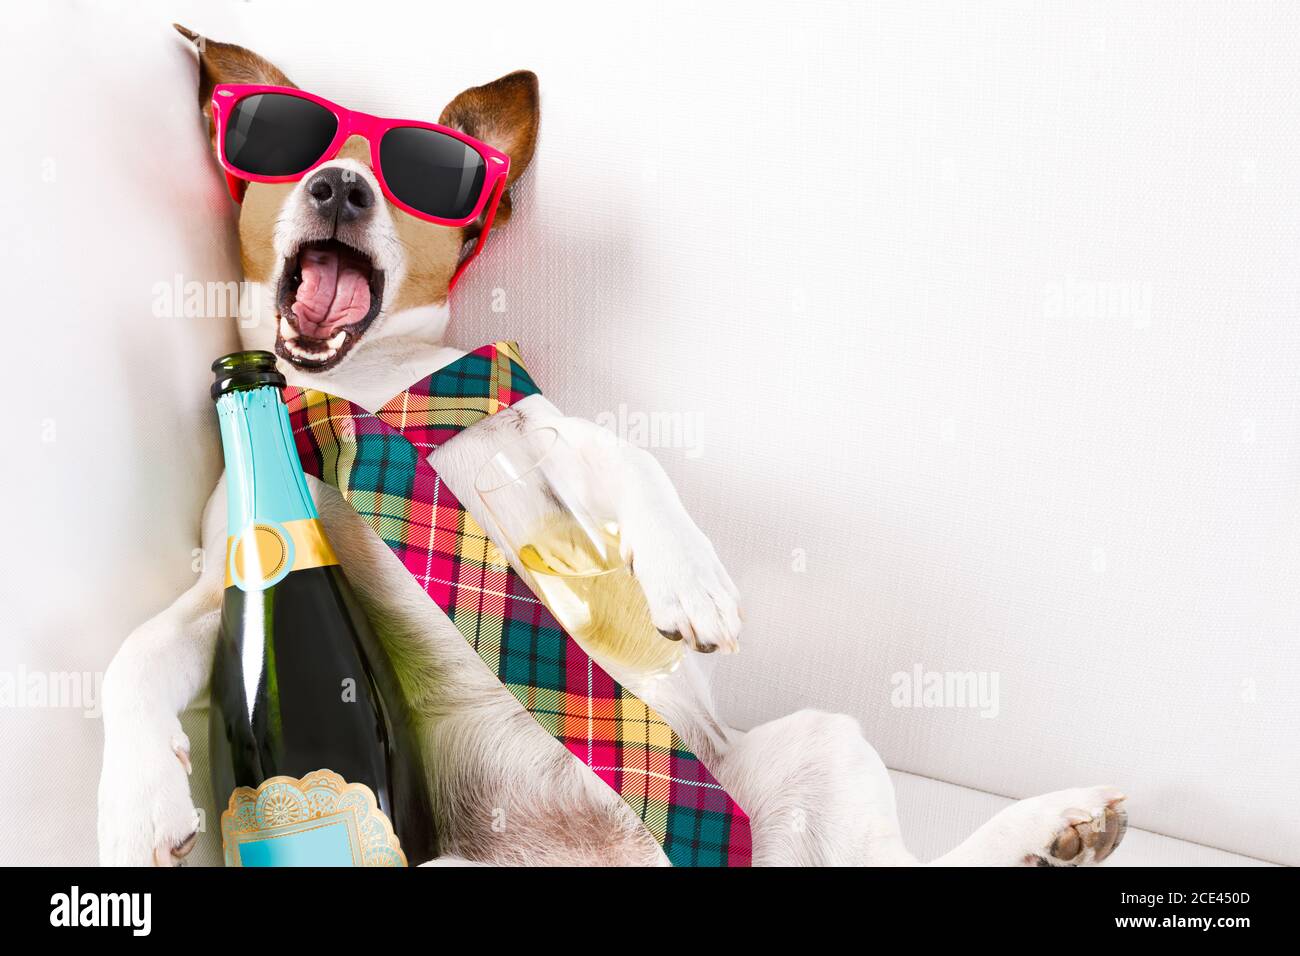 drunk hangover dog Stock Photo - Alamy